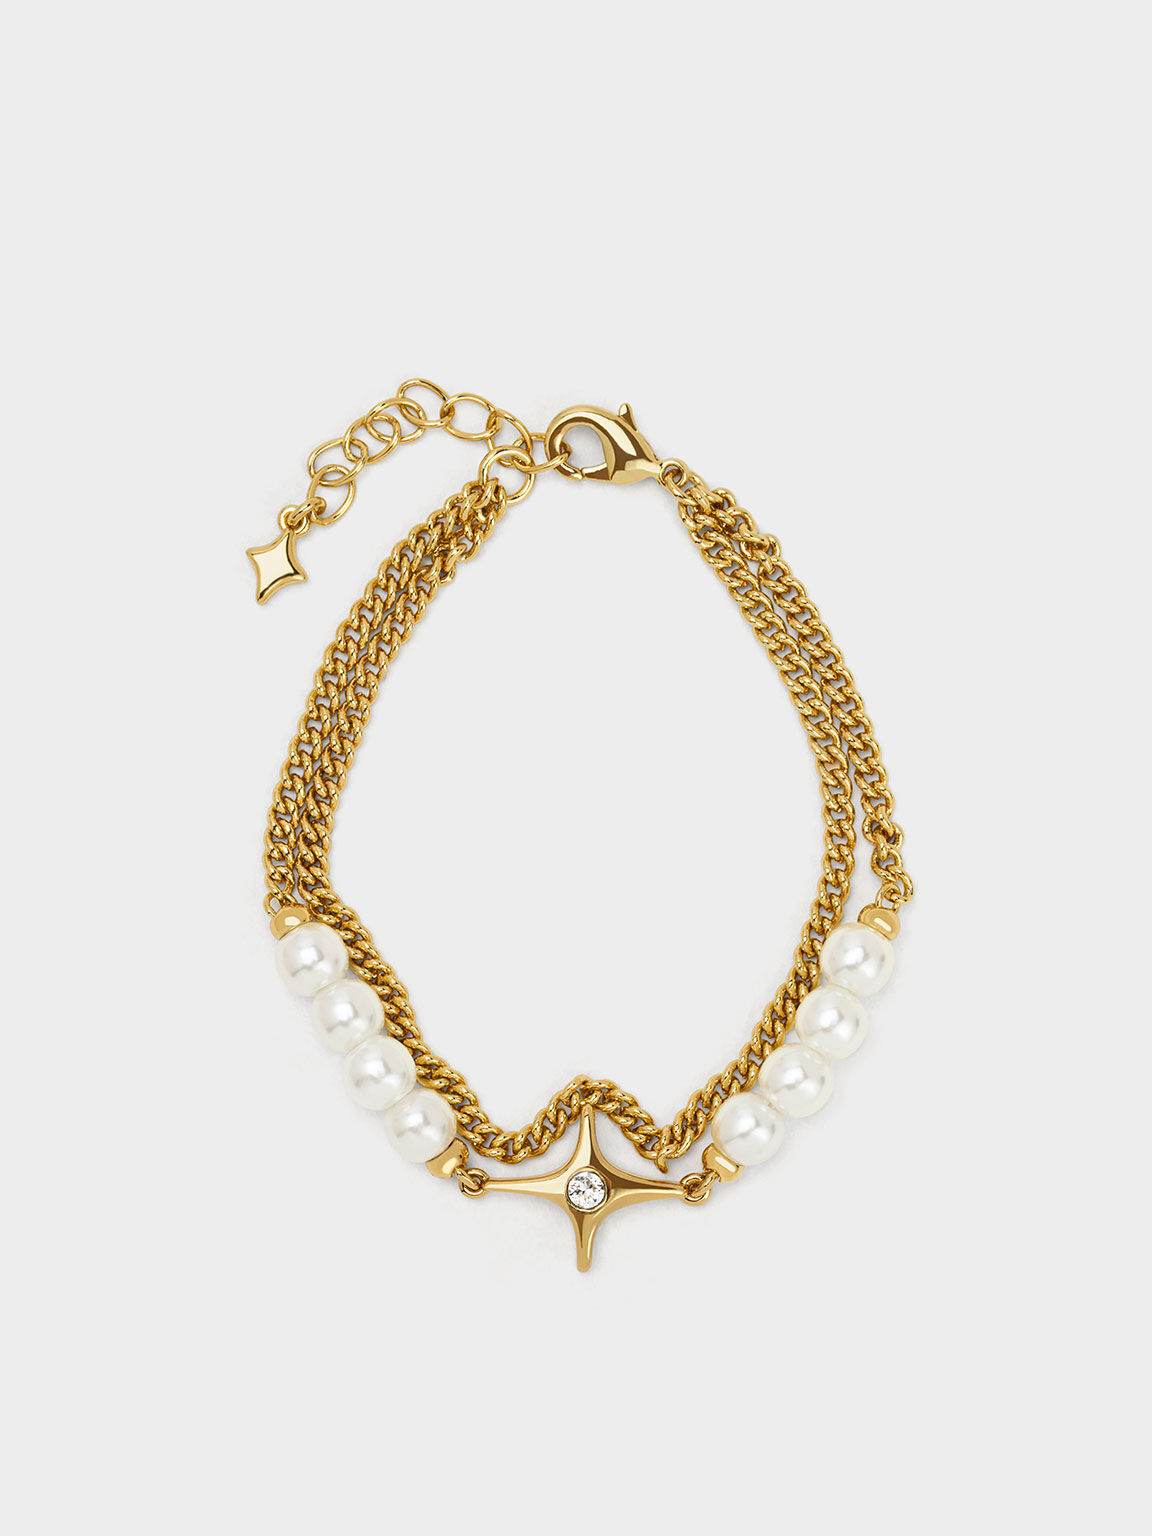 Buy Gold Bracelets & Bangles for Women by Jewels galaxy Online | Ajio.com